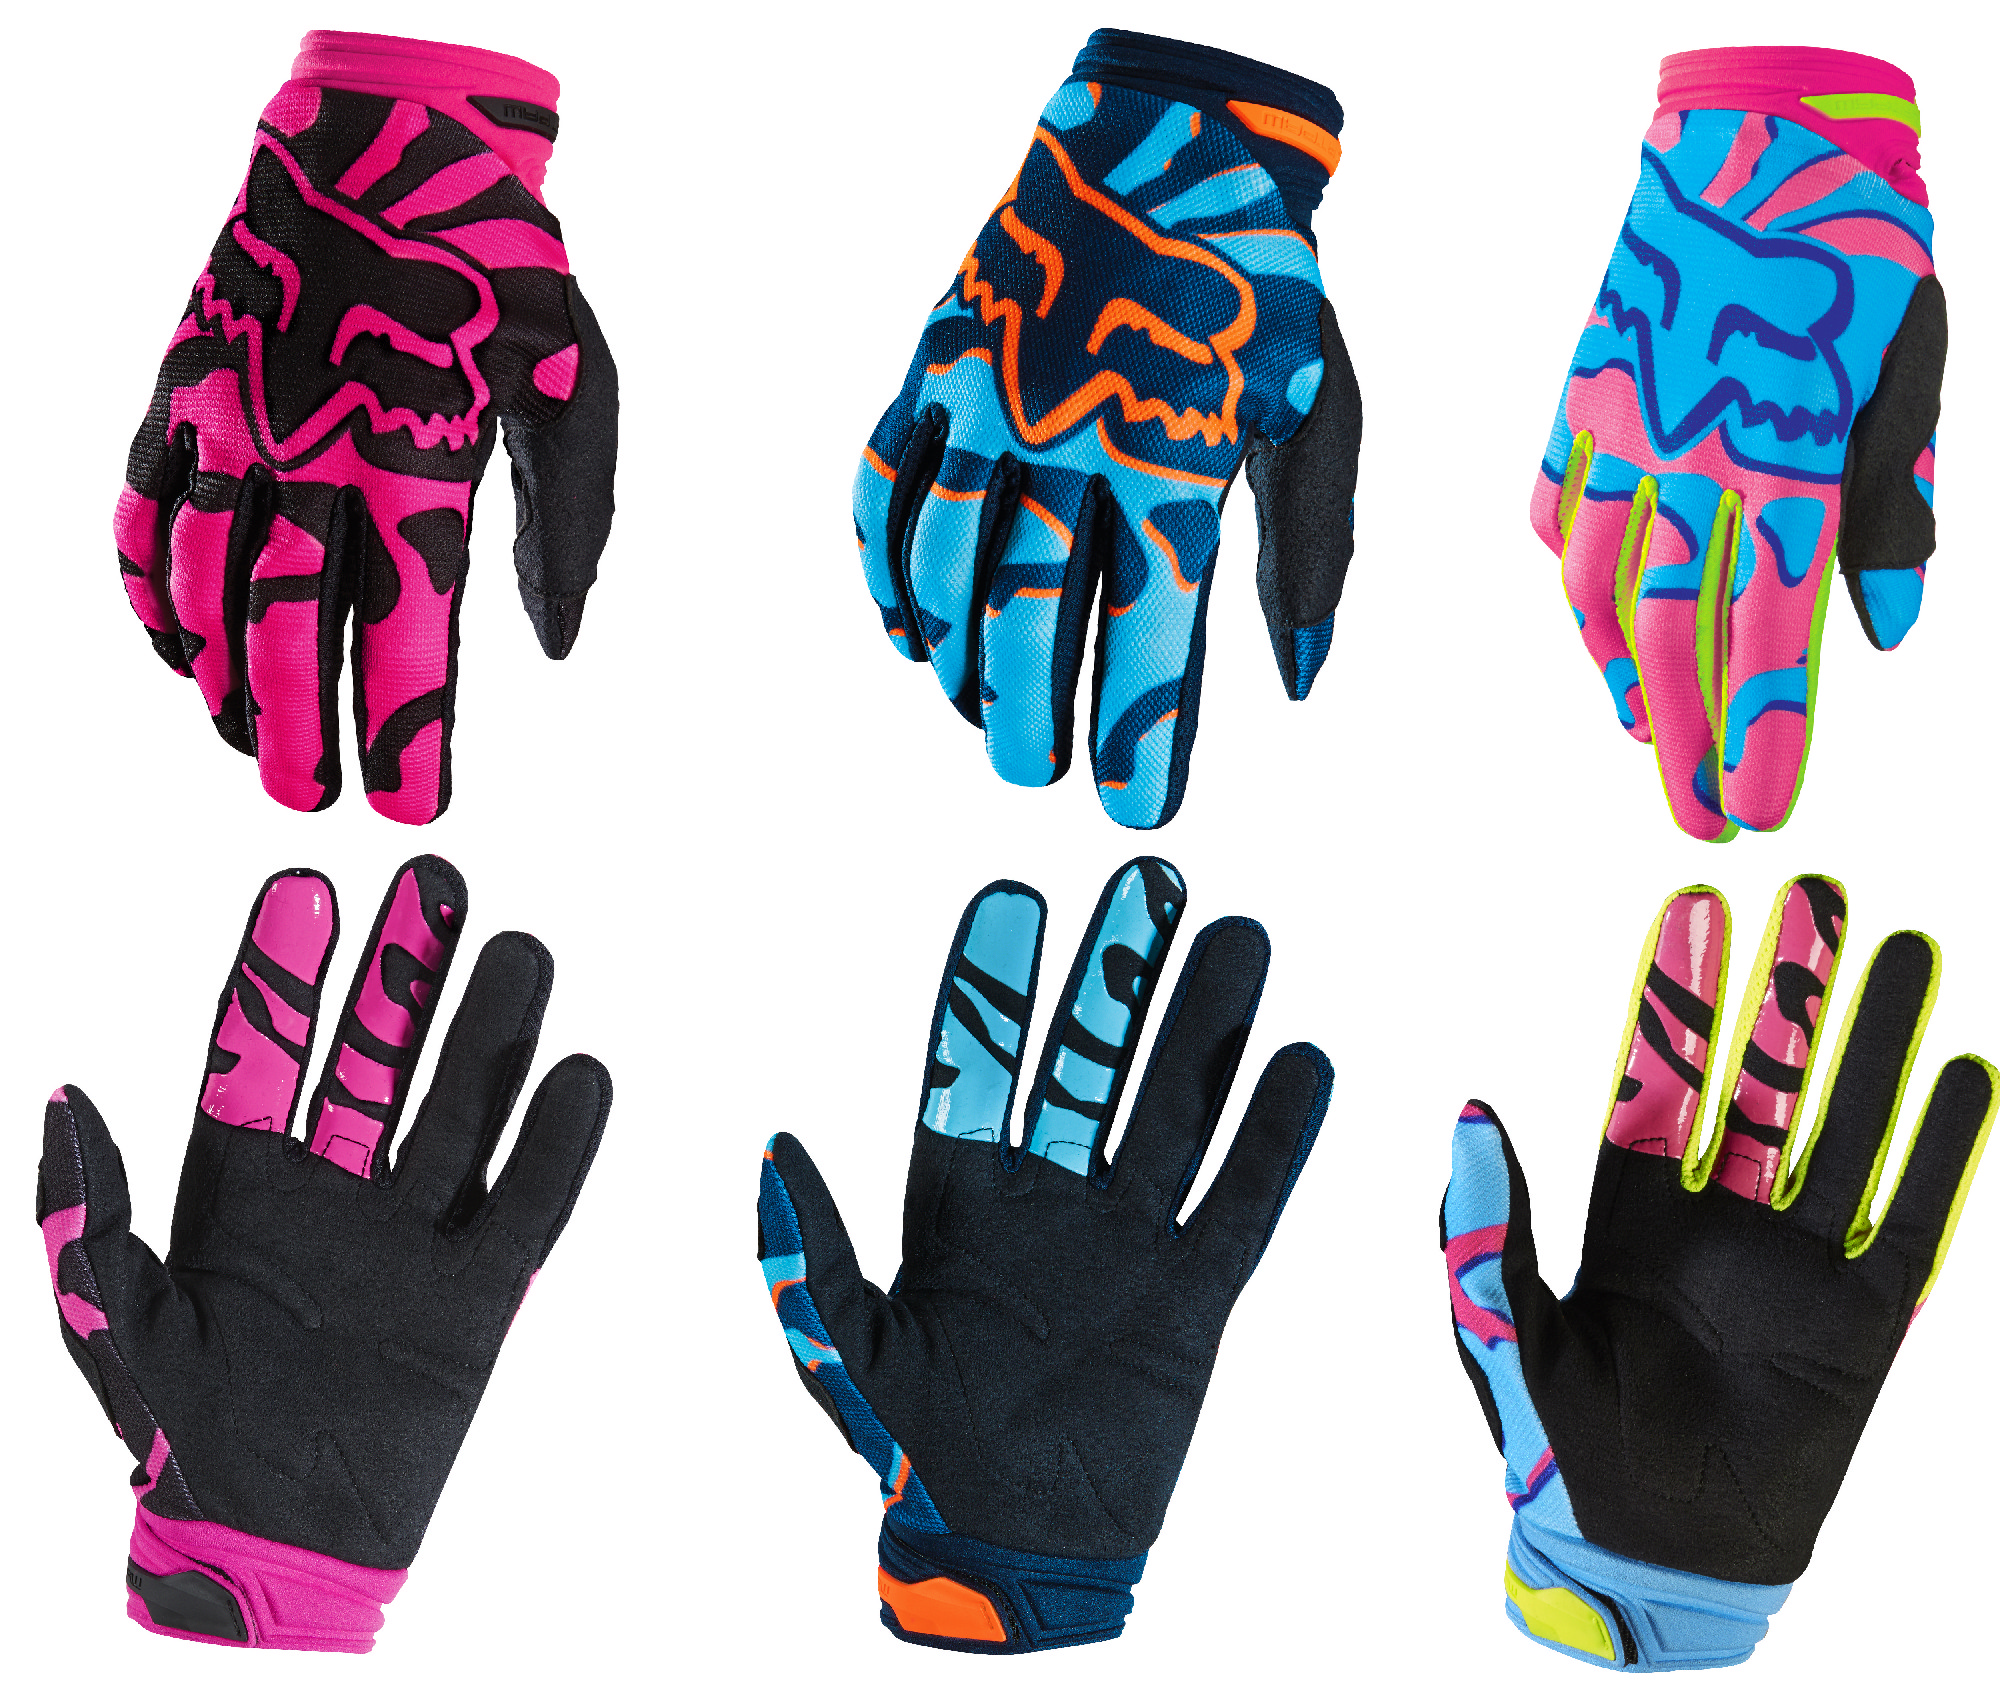 Fox Racing Womens All Sizes and Colors Dirtpaw Dirt Bike Gloves MX ATV 2016 | eBay